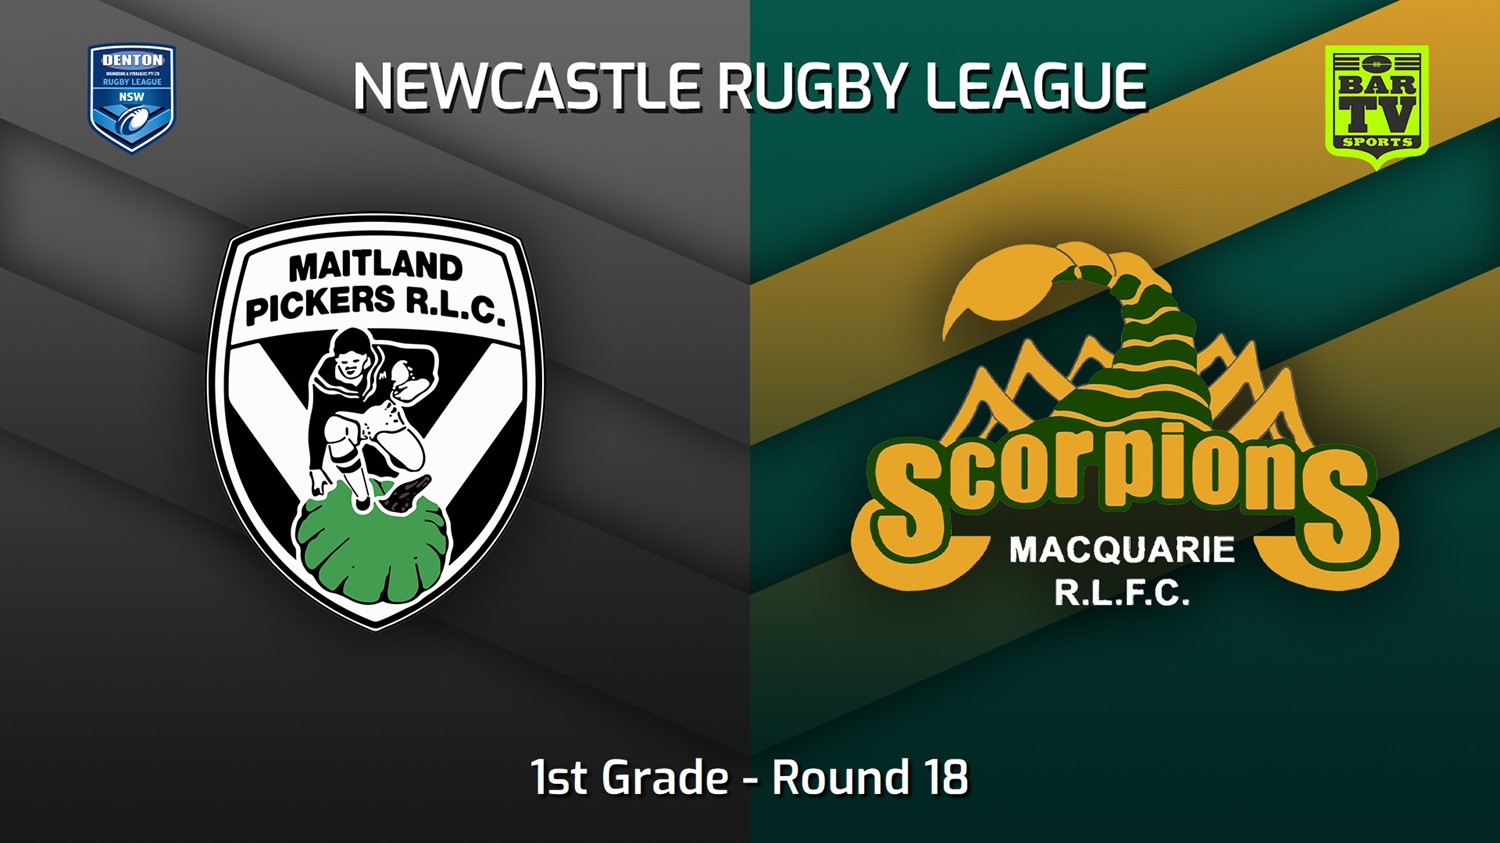 220807-Newcastle Round 18 - 1st Grade - Maitland Pickers v Macquarie Scorpions Slate Image